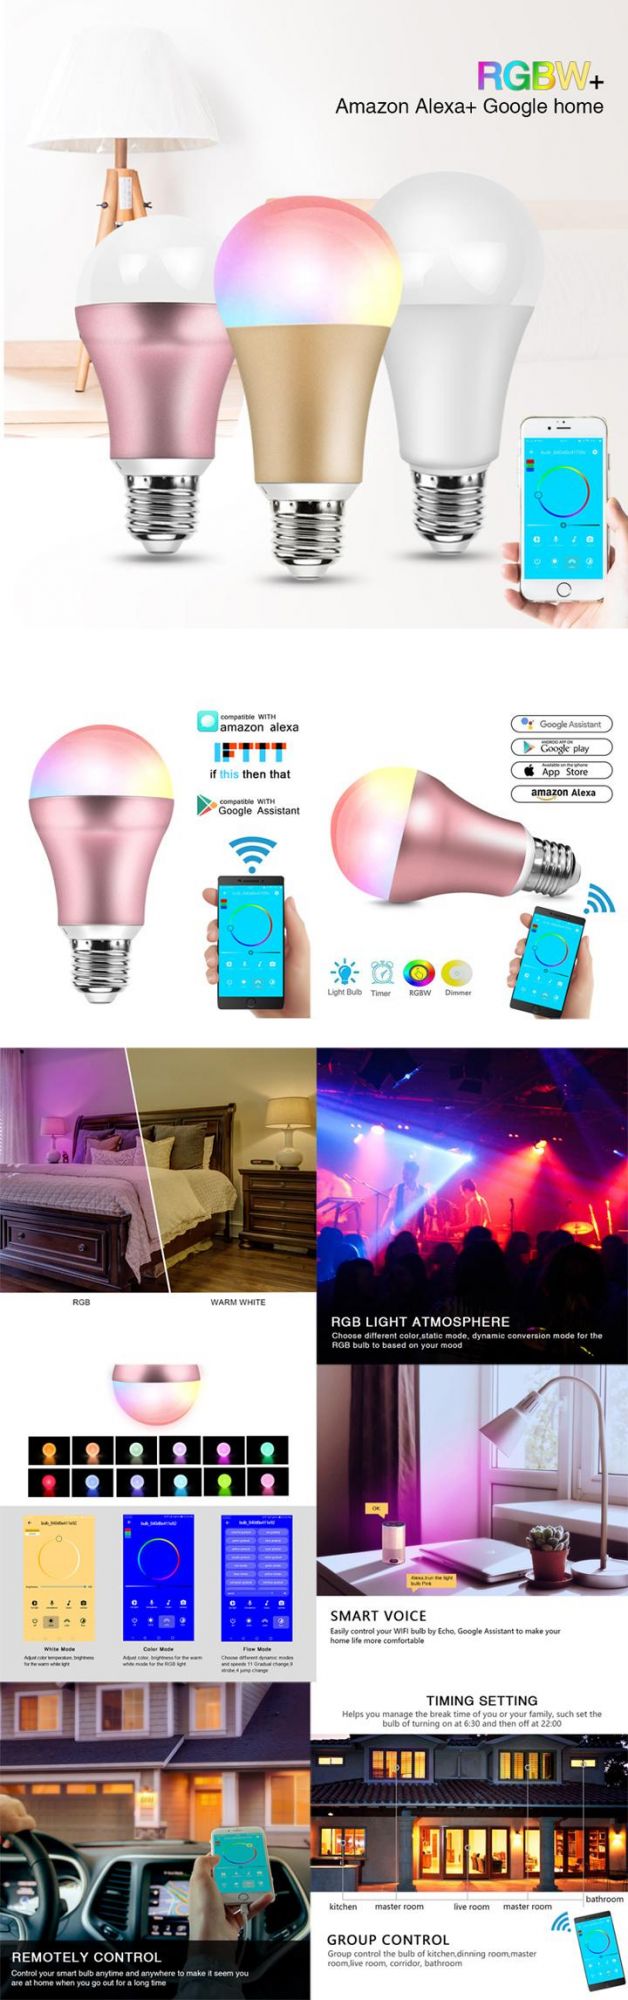 7W Color Change Google Smart Lighting LED Bulb for Home